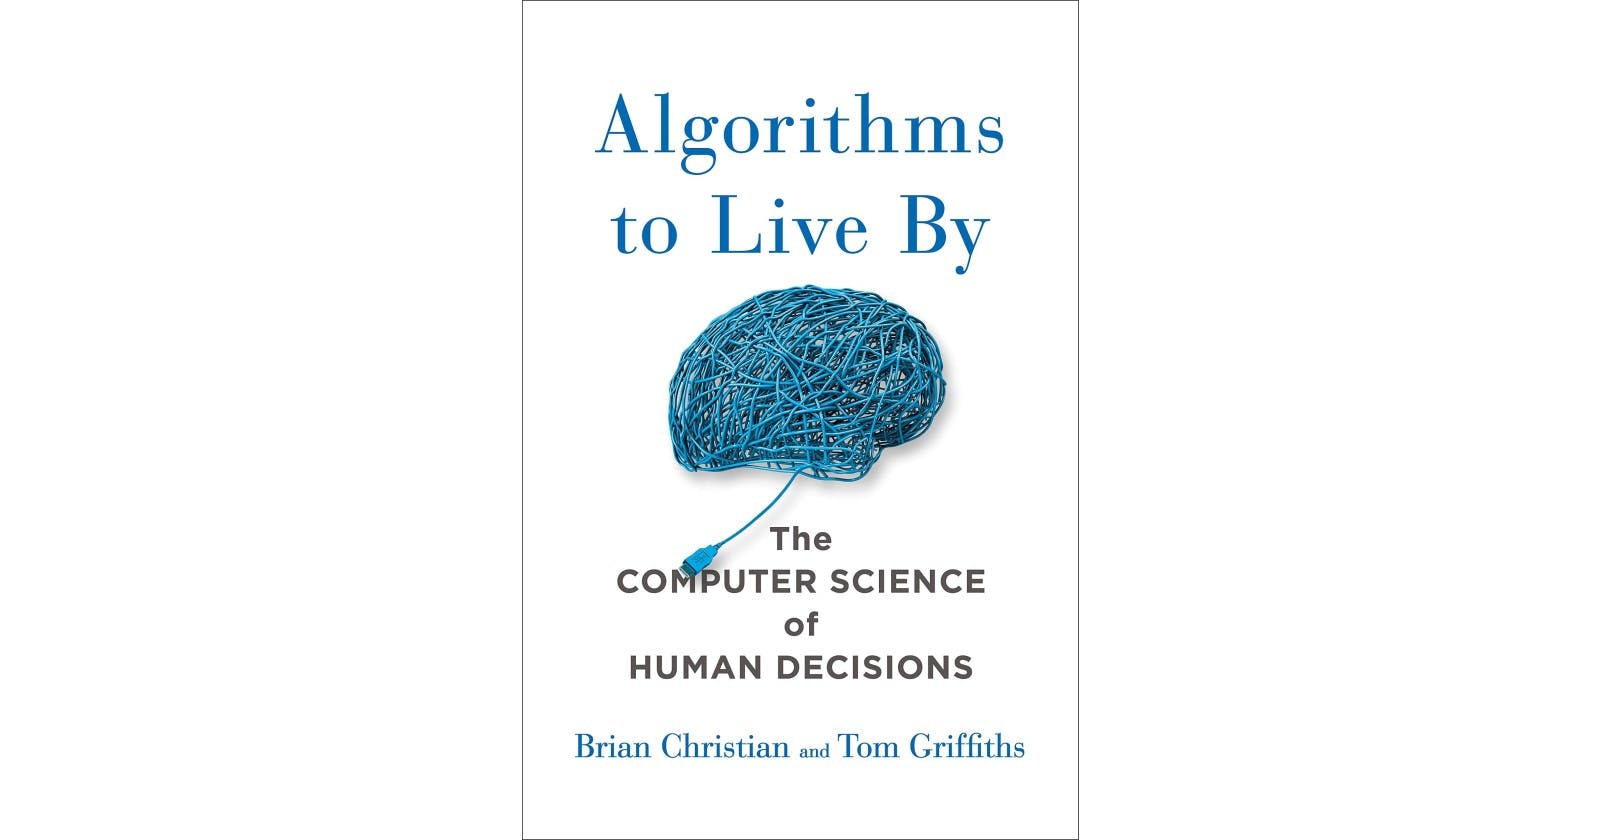 Algorithms & Our Daily Life